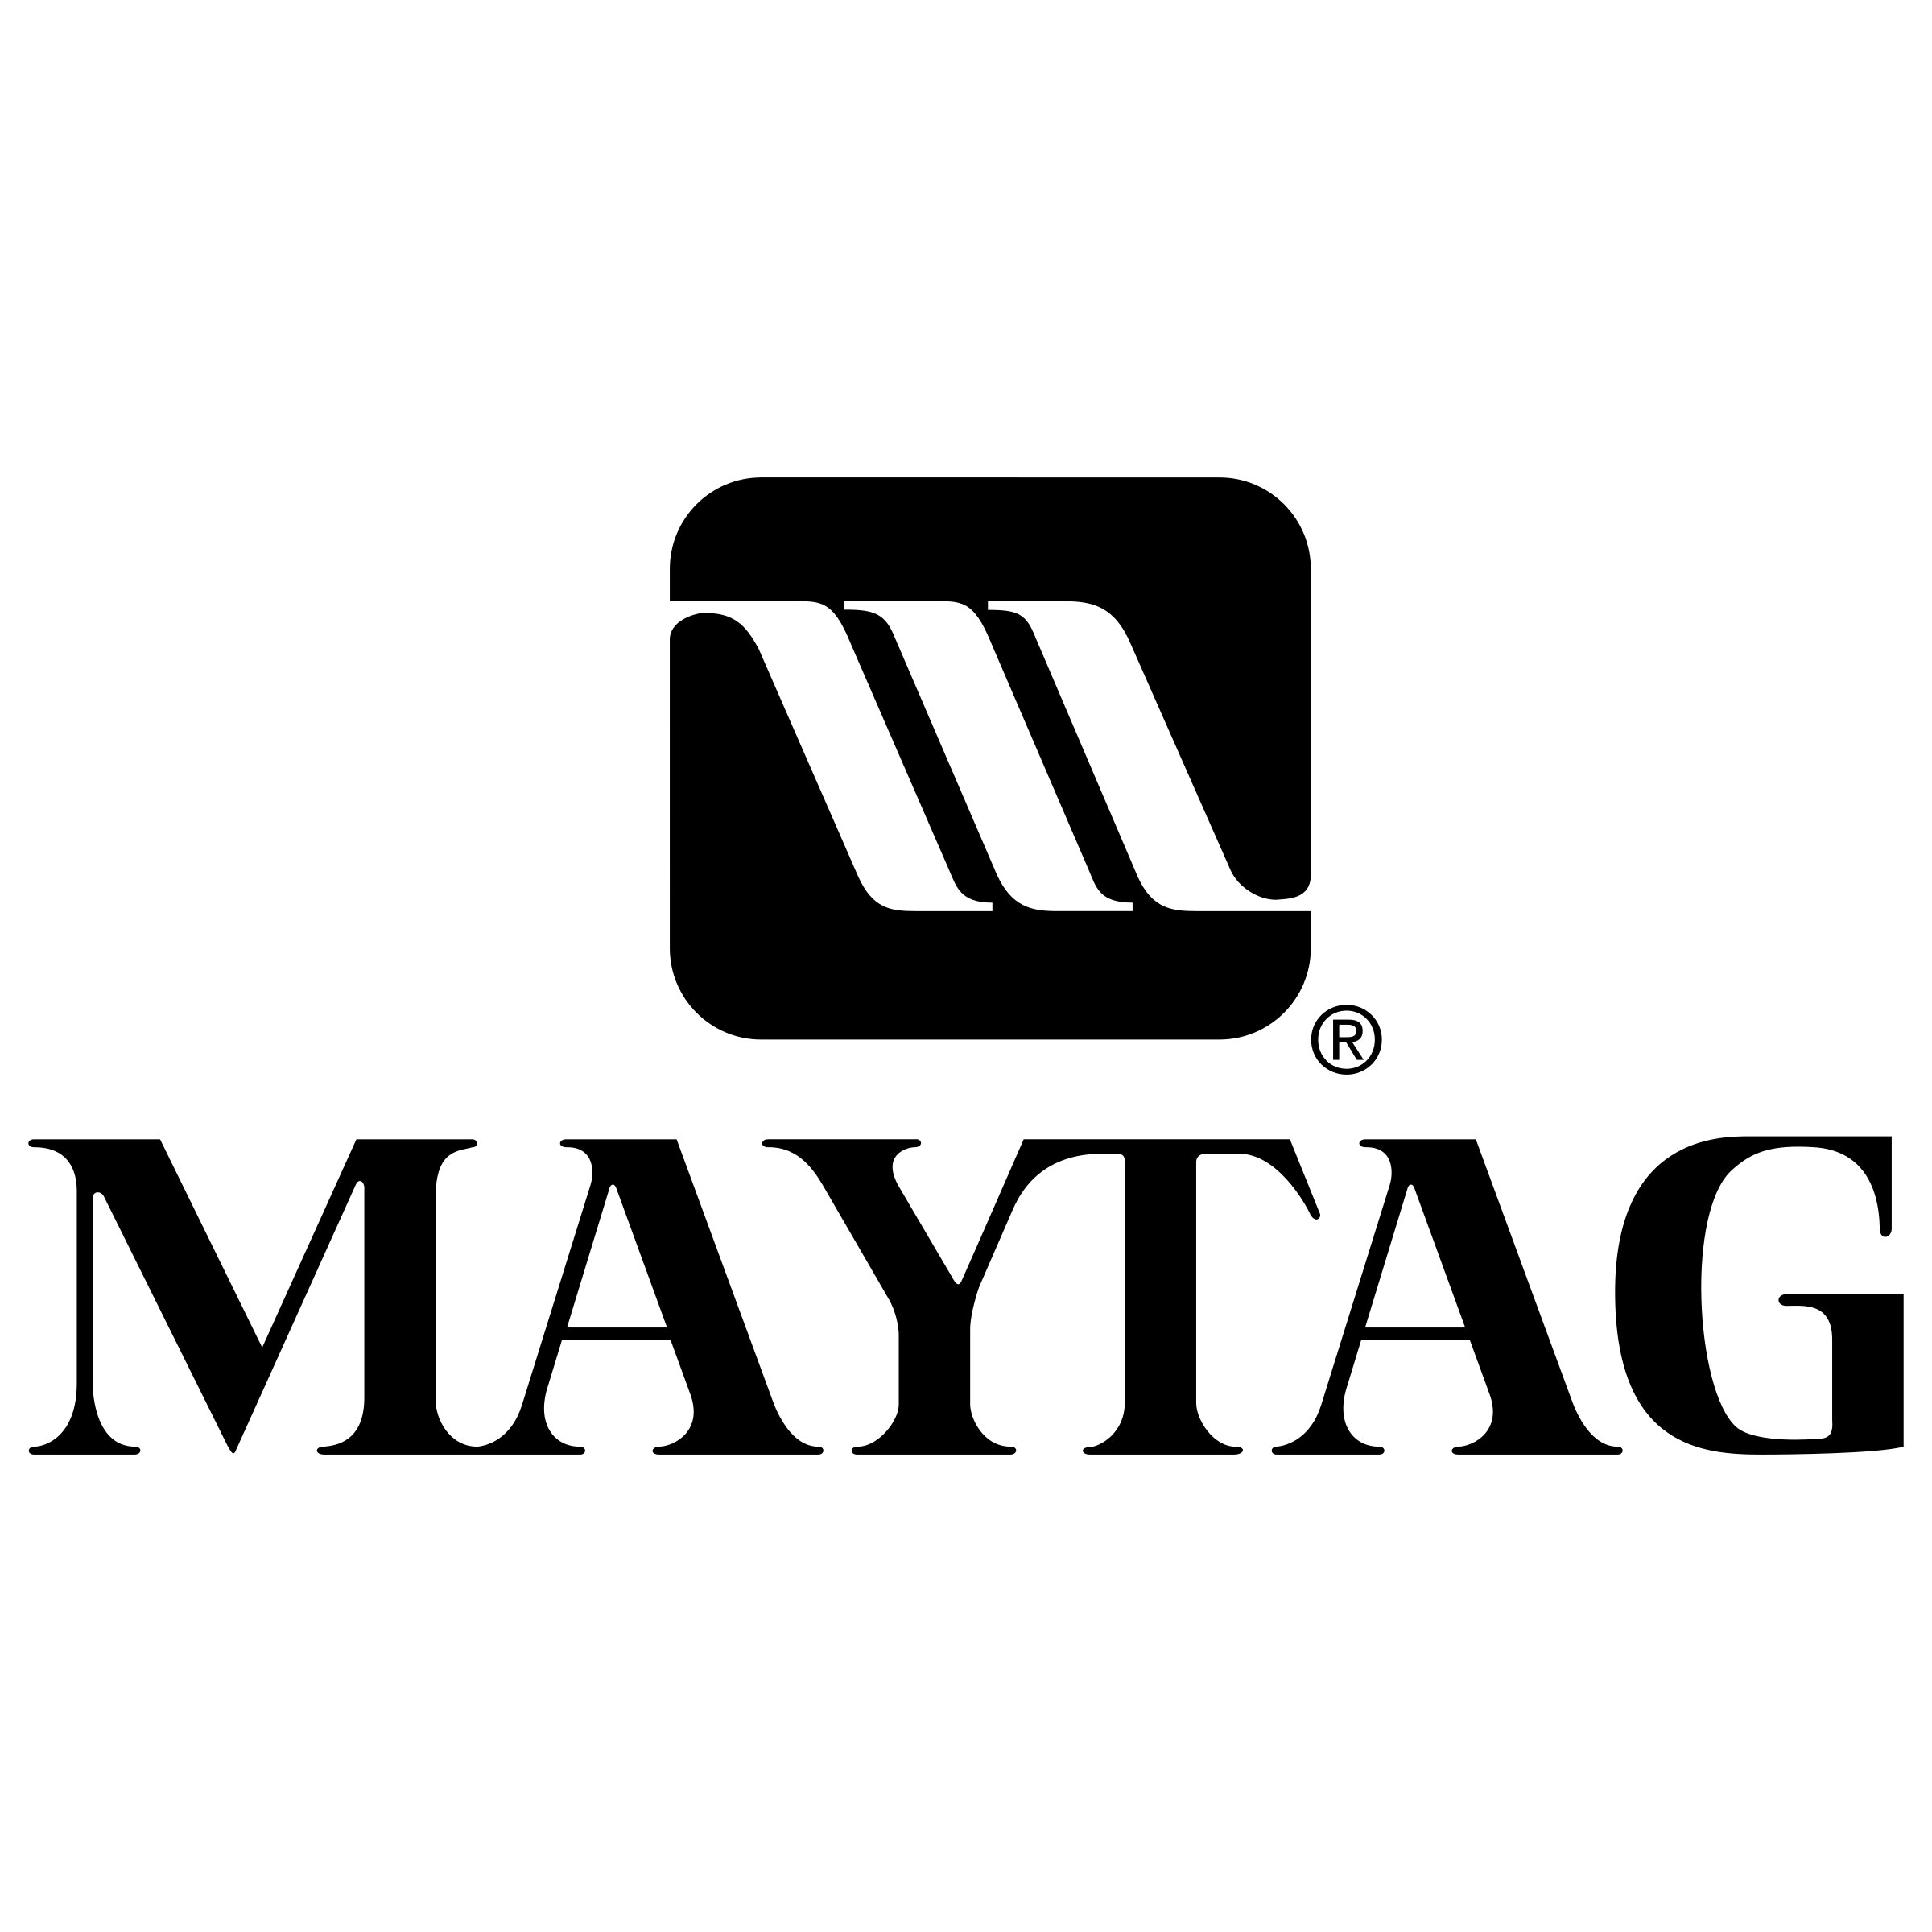 Maytag Logo - Maytag Logo PNG Transparent & SVG Vector - Freebie Supply